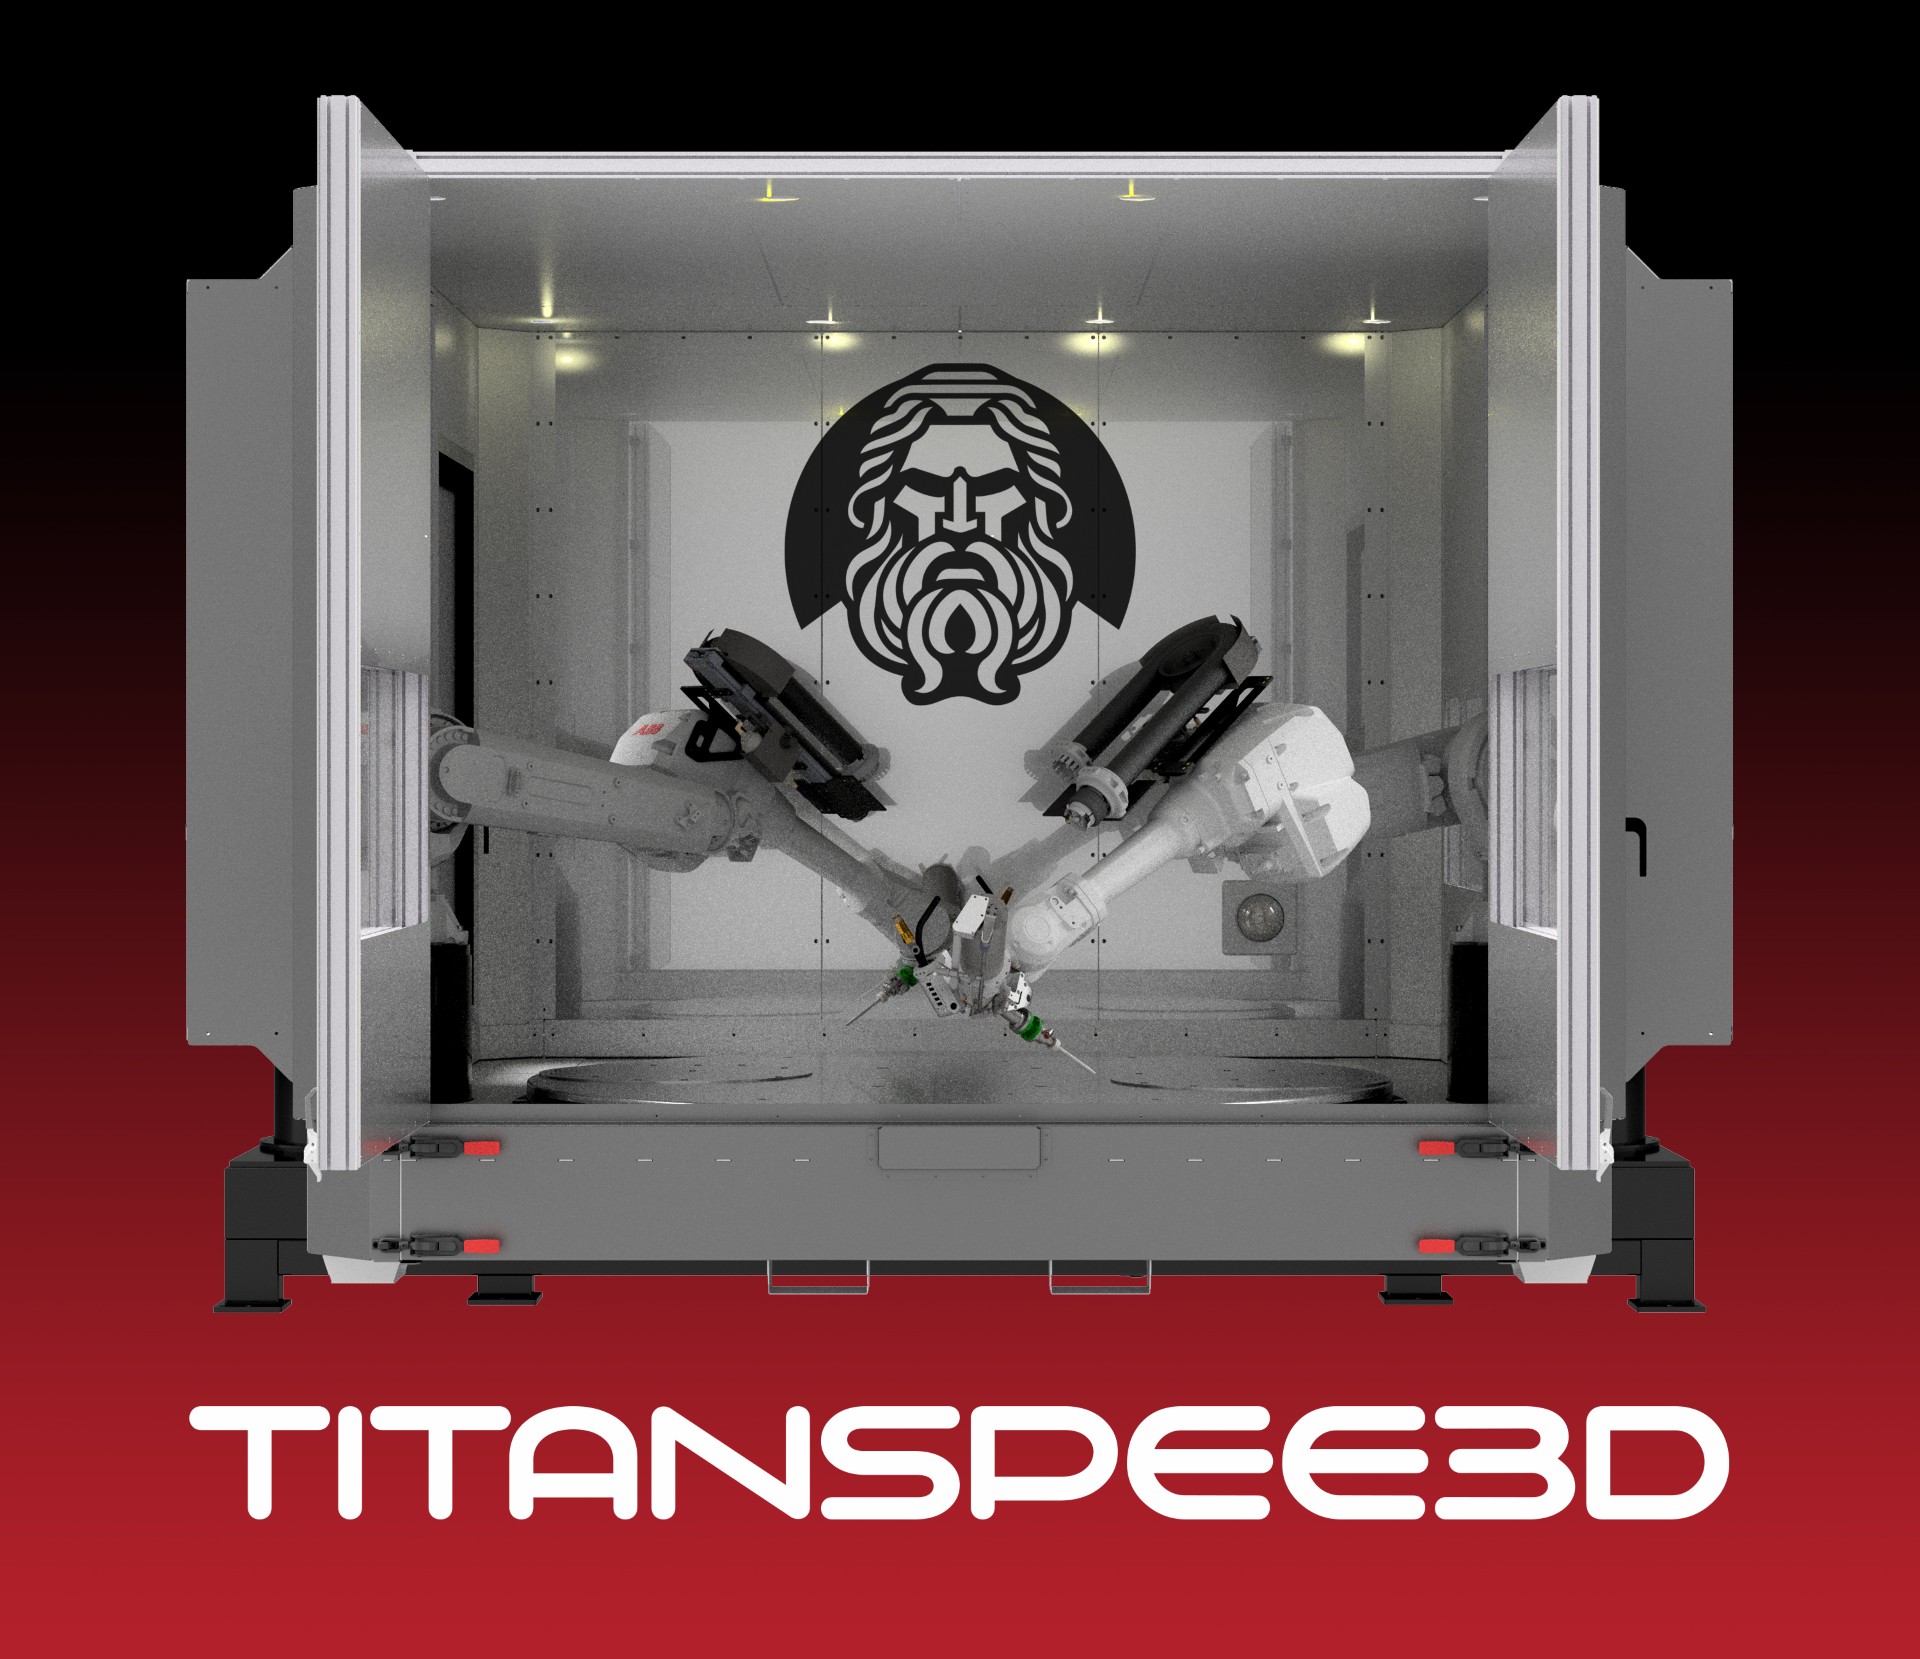 TitanSPEE3D